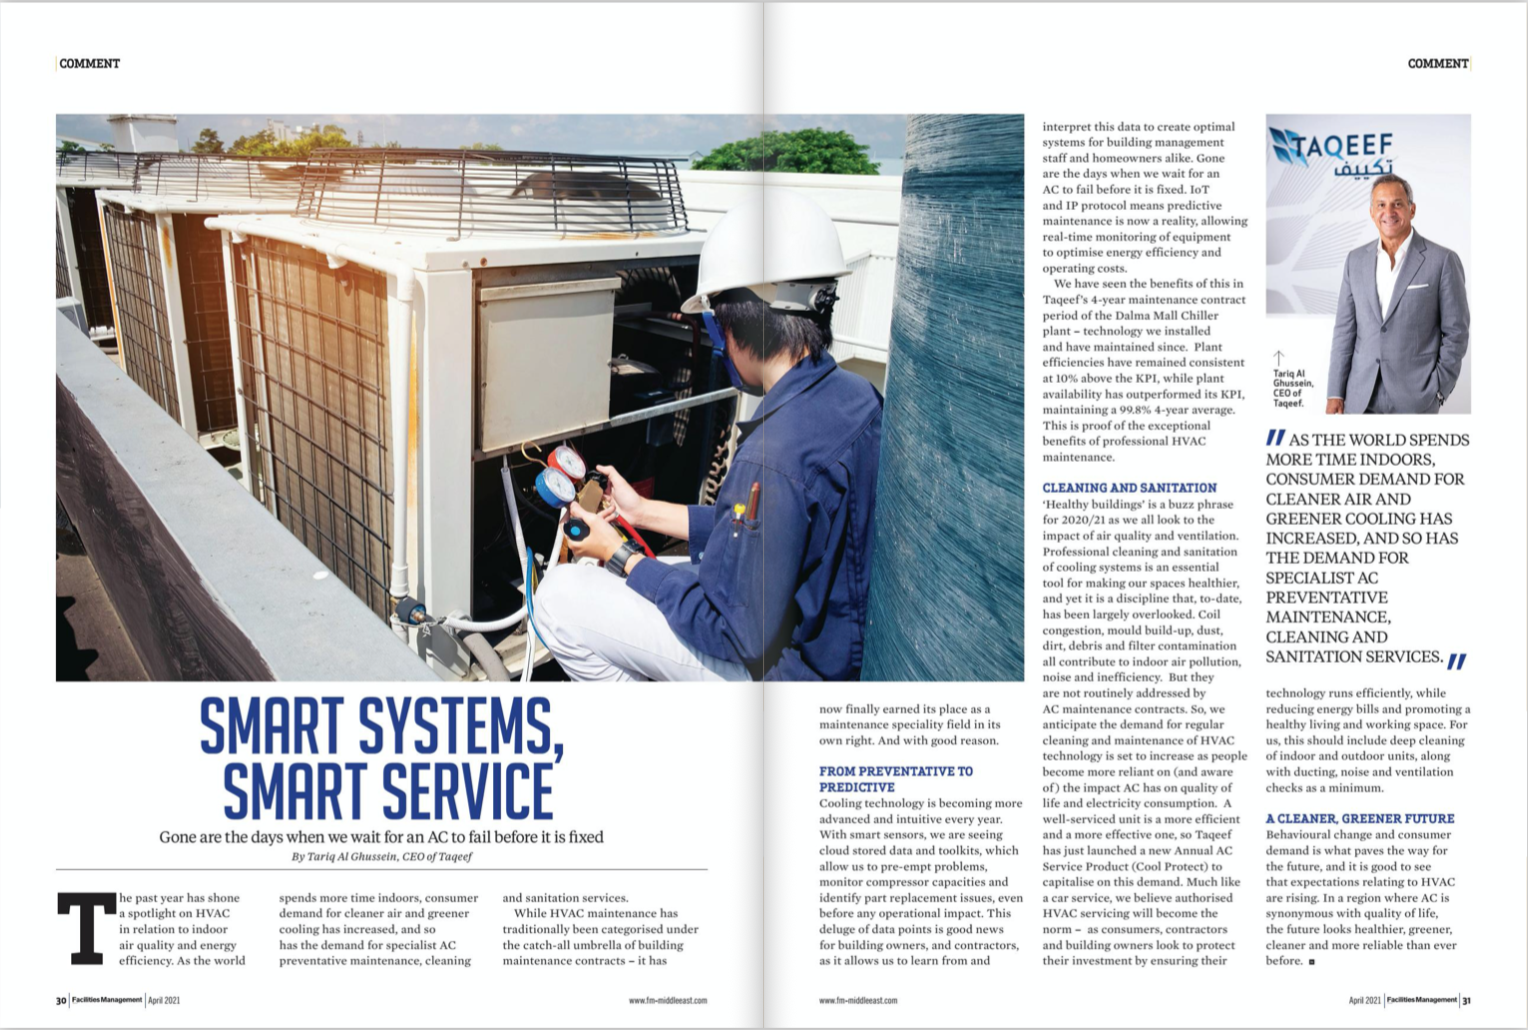 Smart Systems, Smart Service